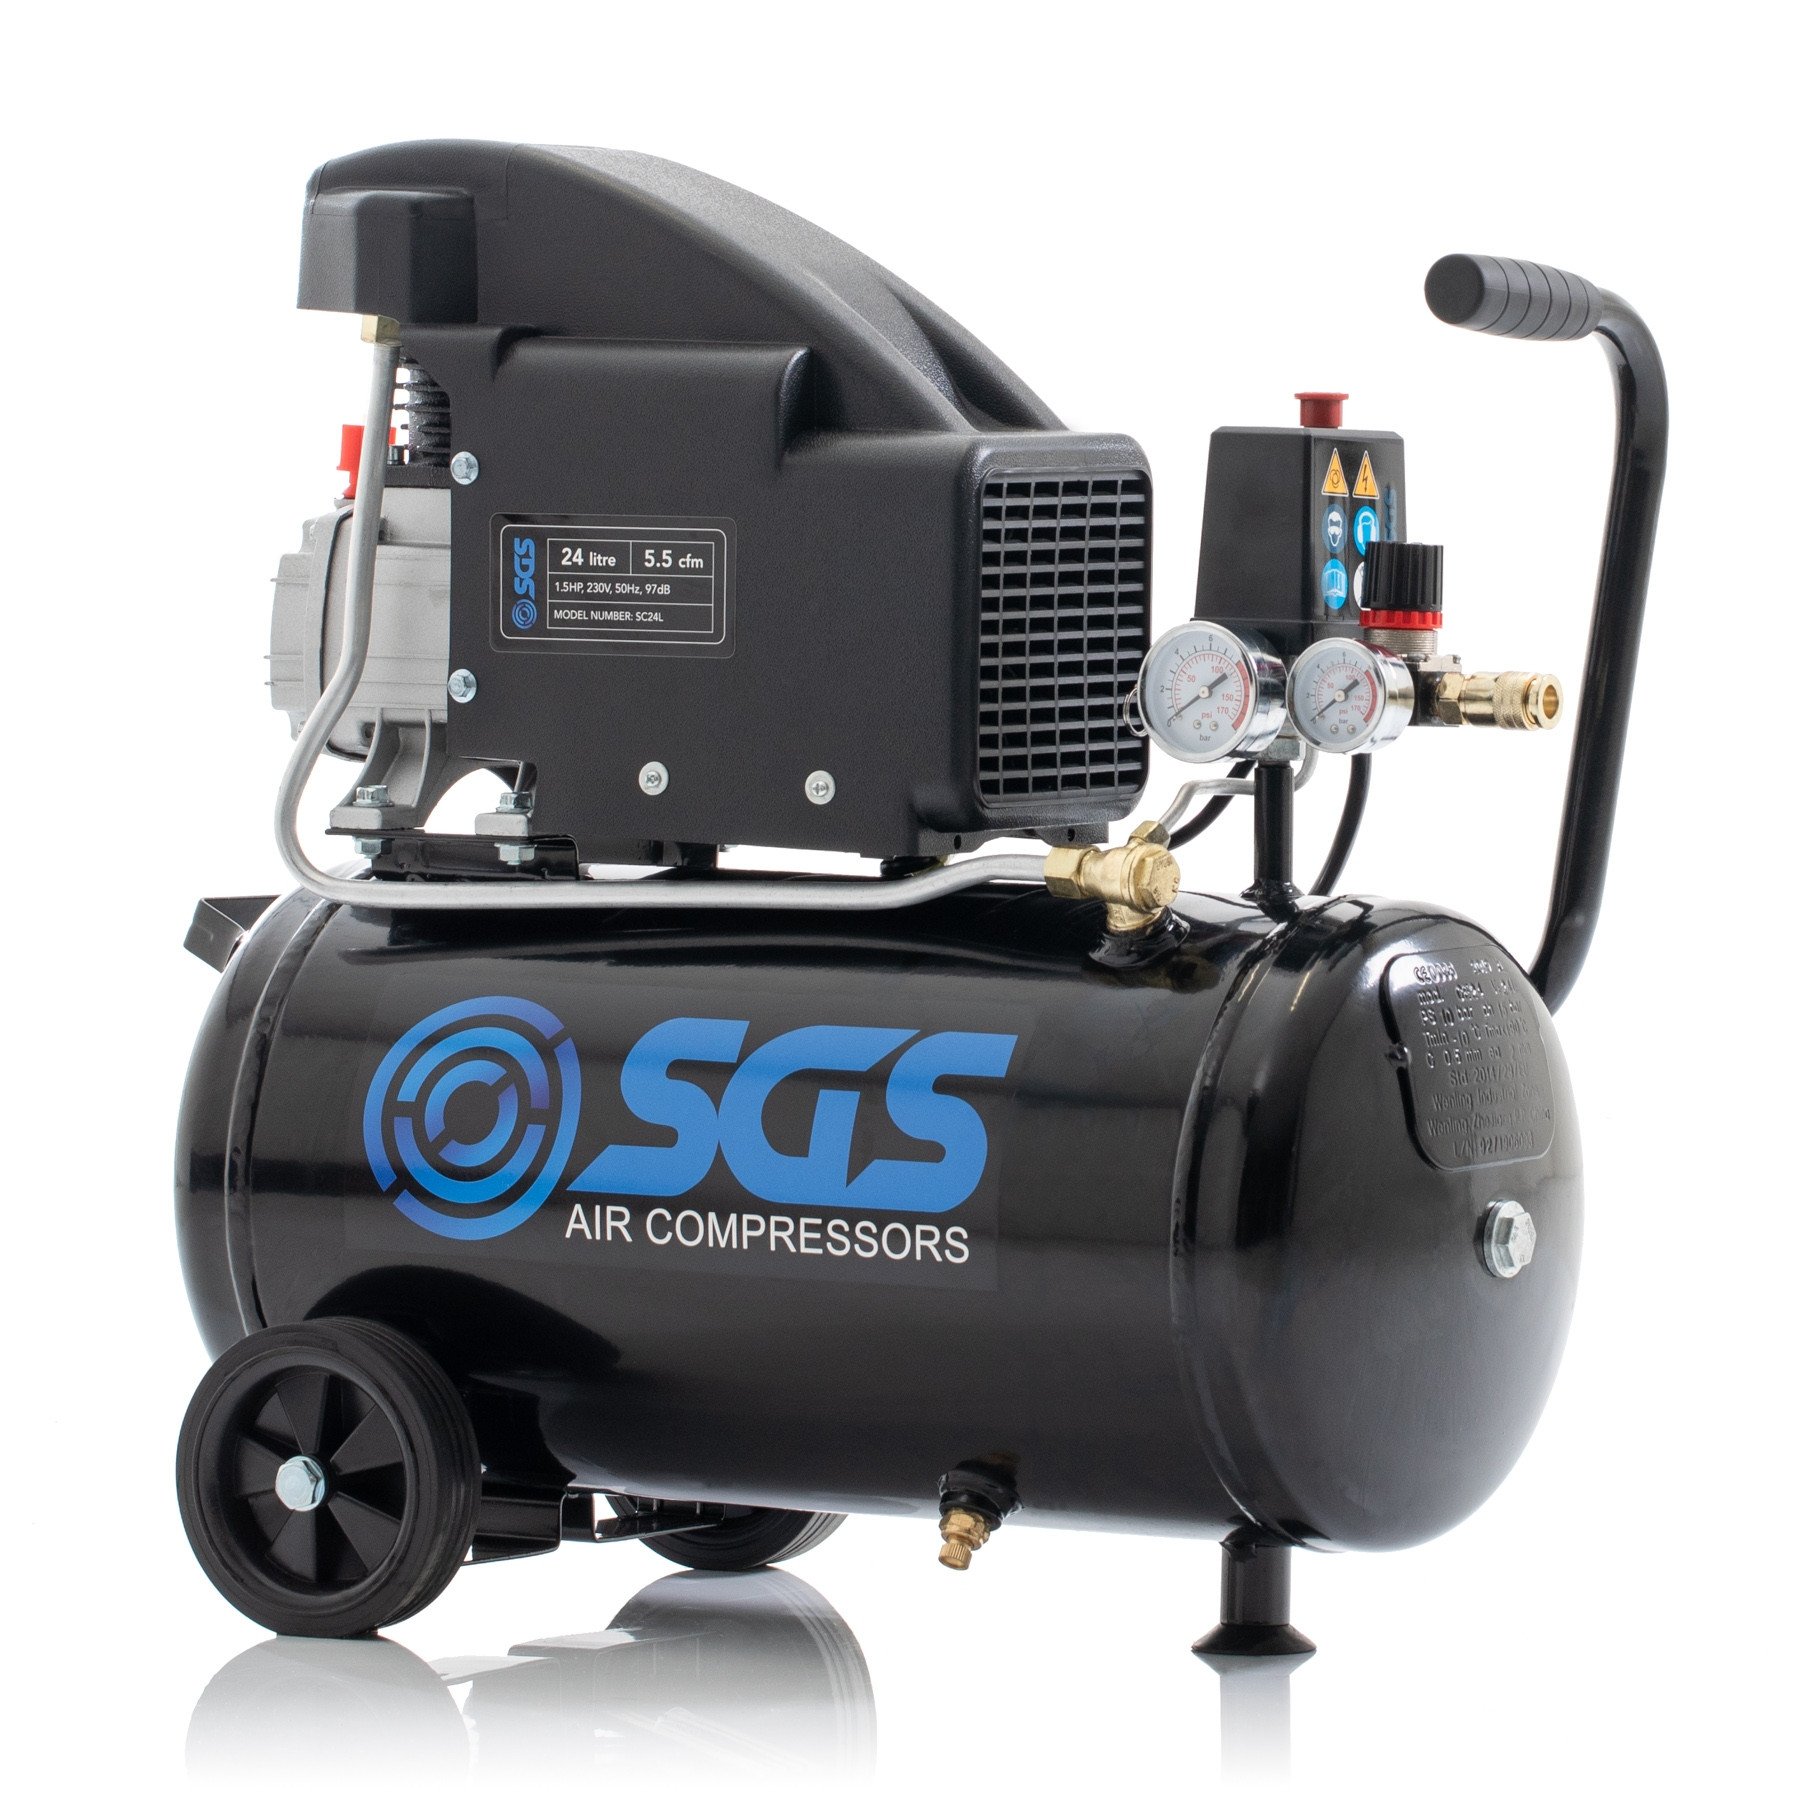 SGS 24升直接驱动空气压缩机- 5.5 CFM, 1.5 HP